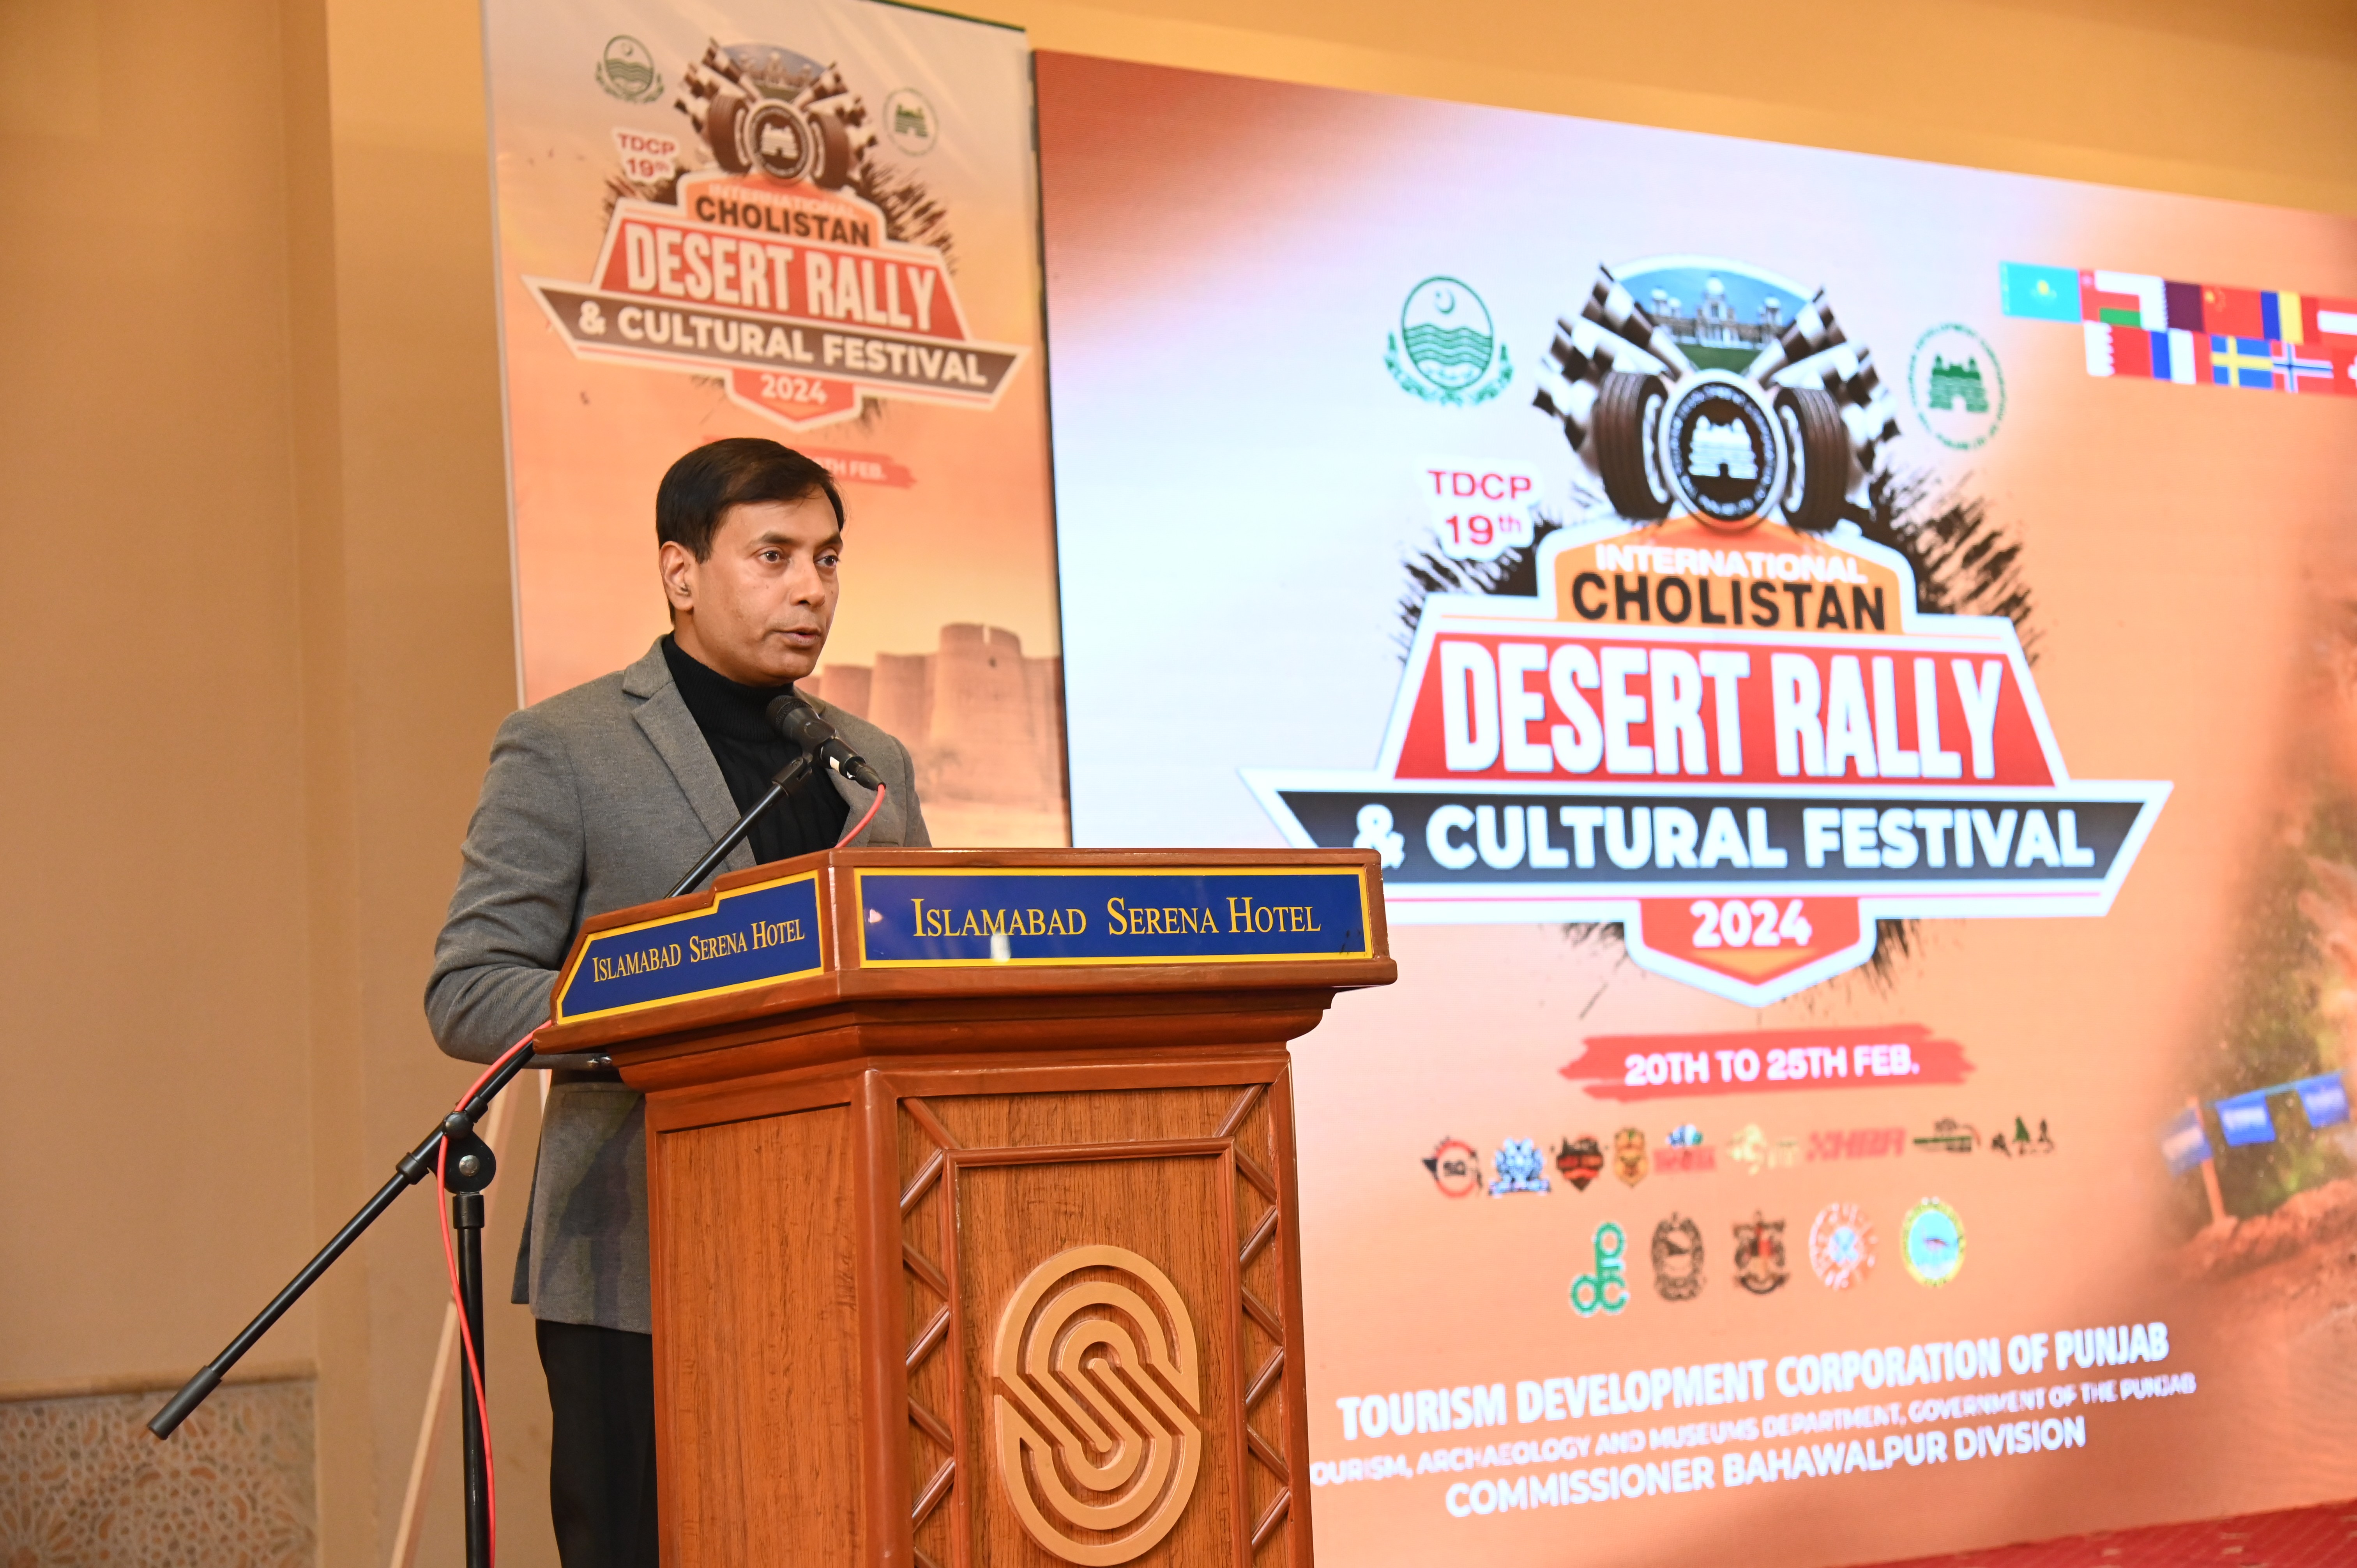 The chief guest expressing his views regarding the Cholistan Desert Rally